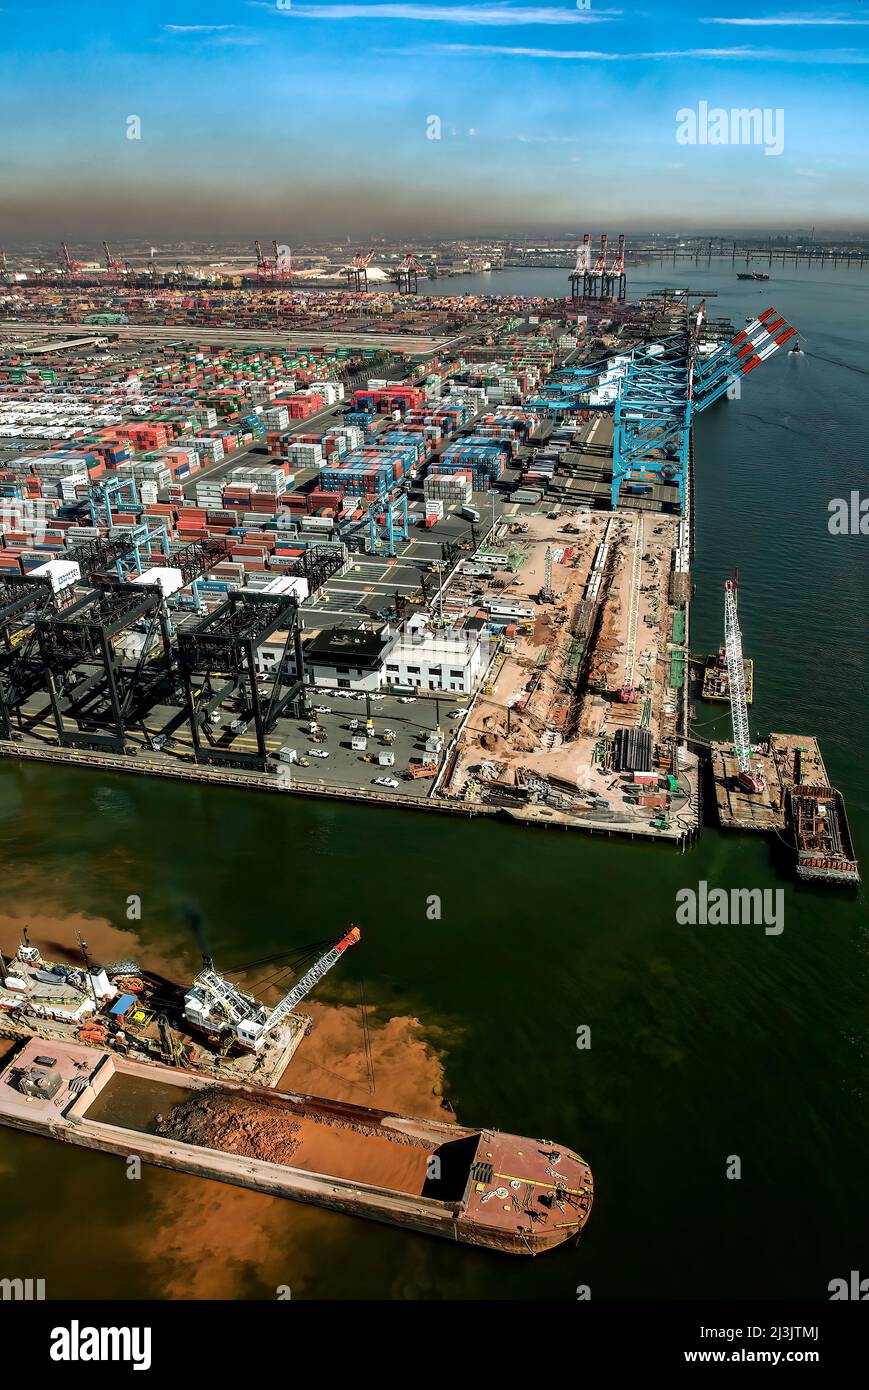 Maher Terminal Loading/Unloading Docks, Dredging Operation, Giant Cranes Stock Photo